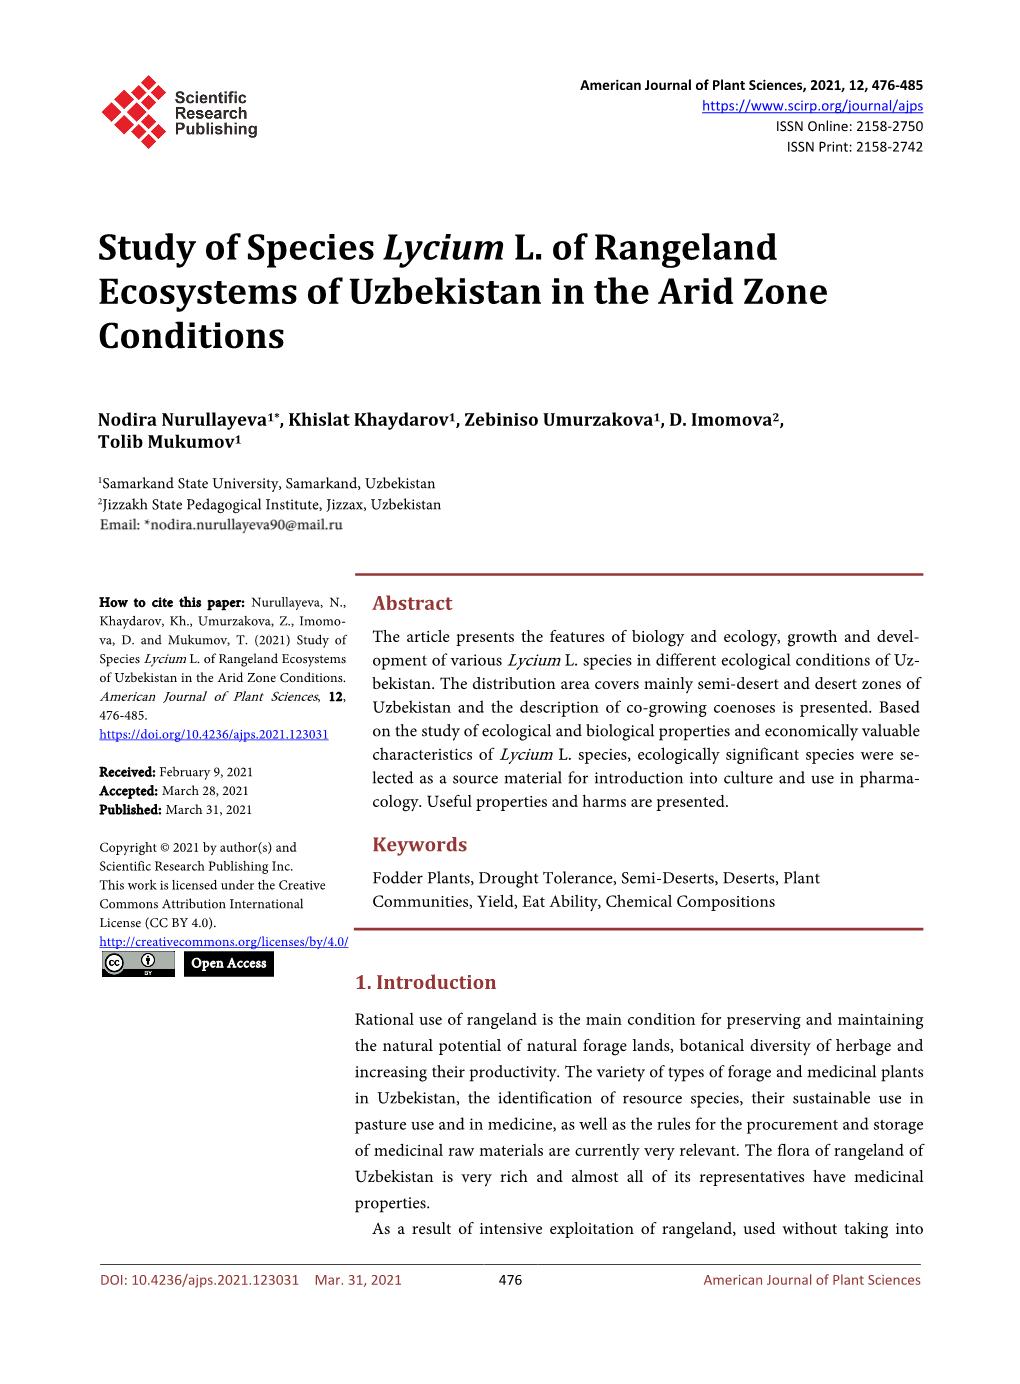 Study of Species Lycium L. of Rangeland Ecosystems of Uzbekistan in the Arid Zone Conditions